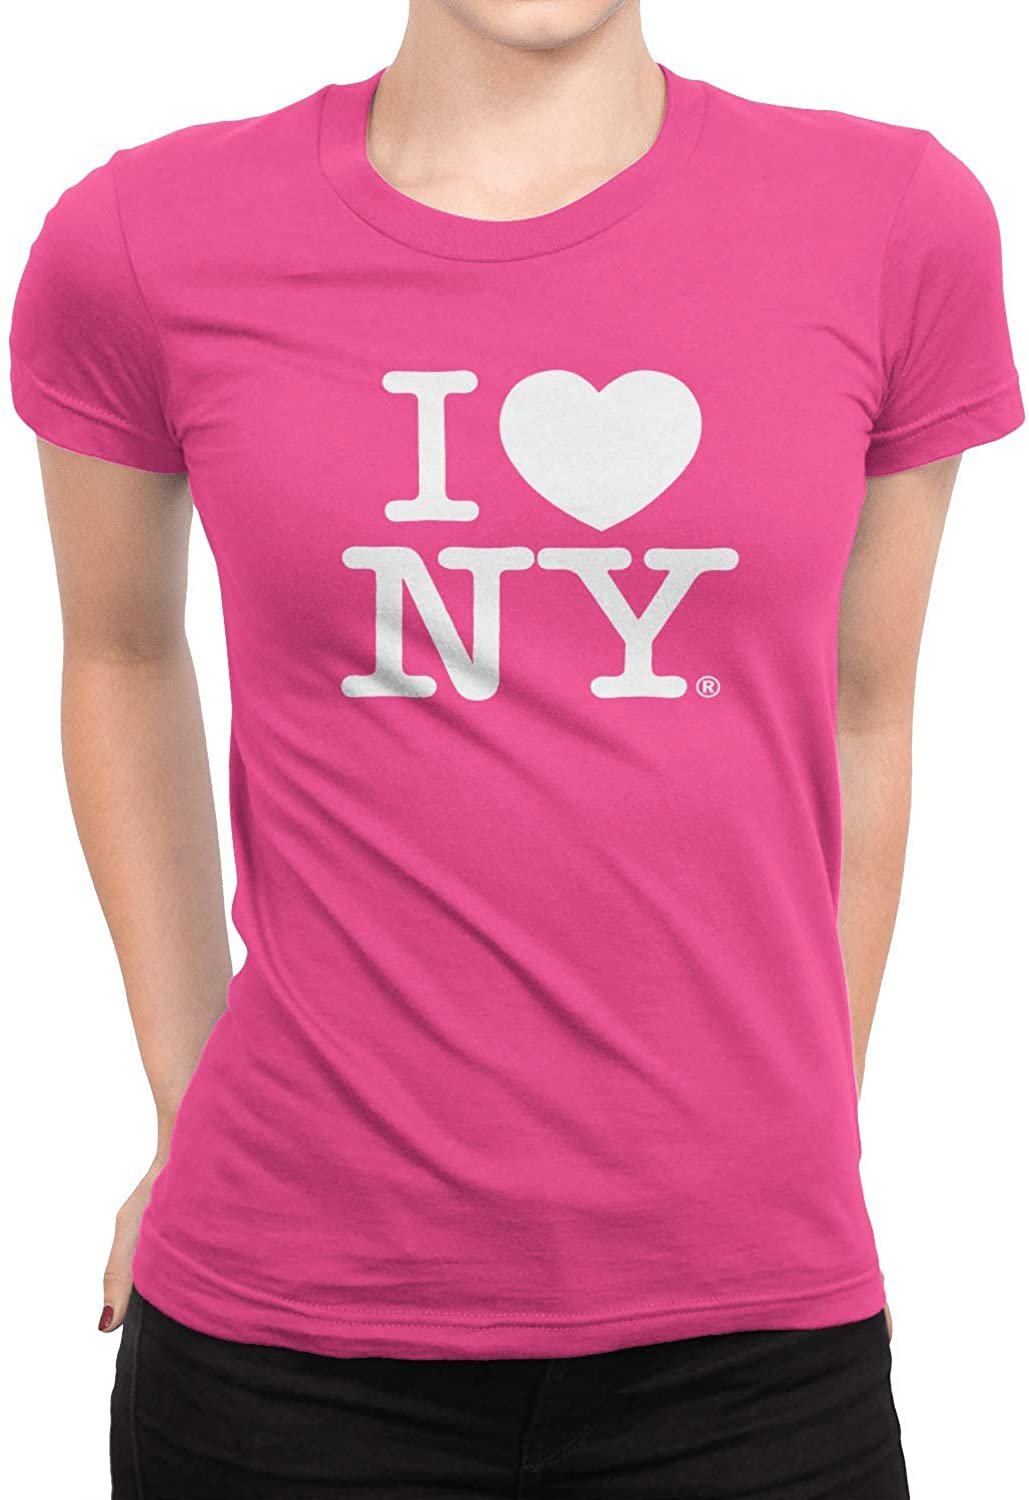 I Love NY Ladies T-Shirt  Tee Hot Pink